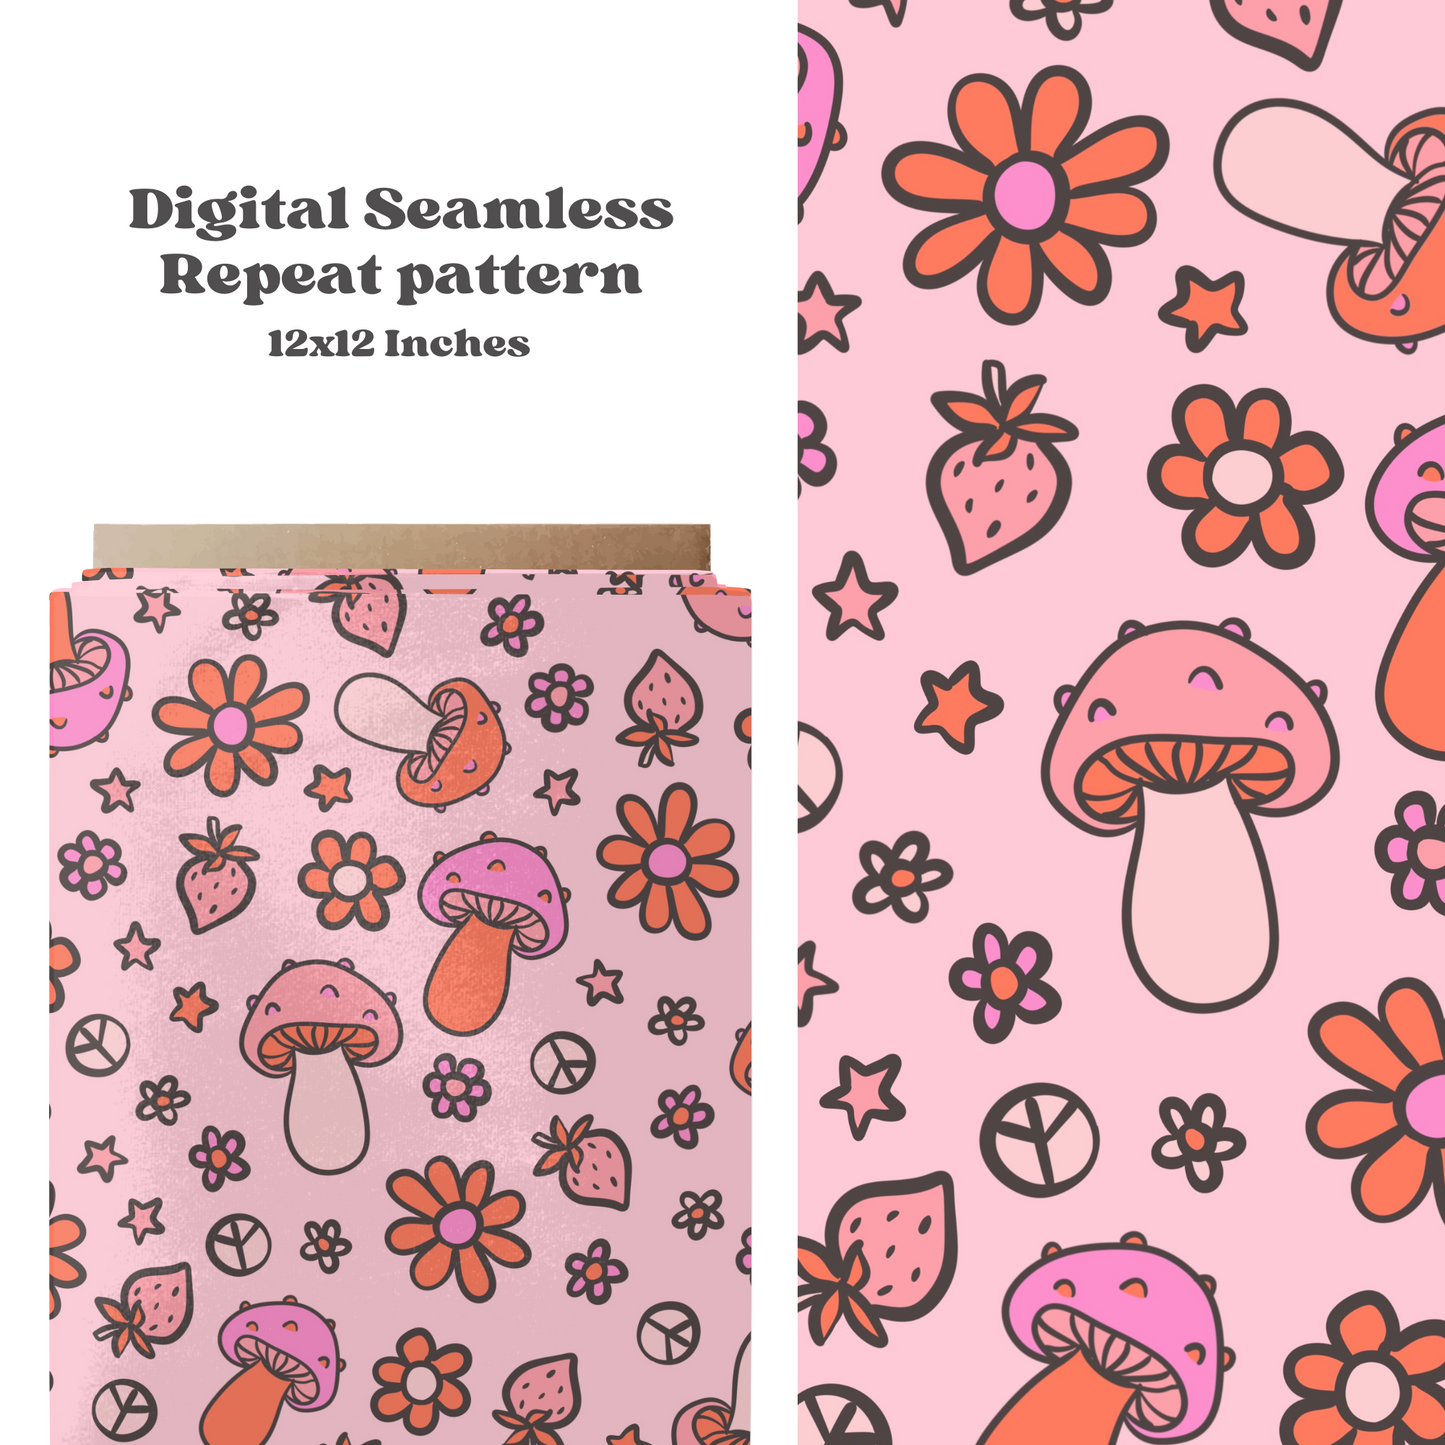 Groovy mushroom floral pattern design